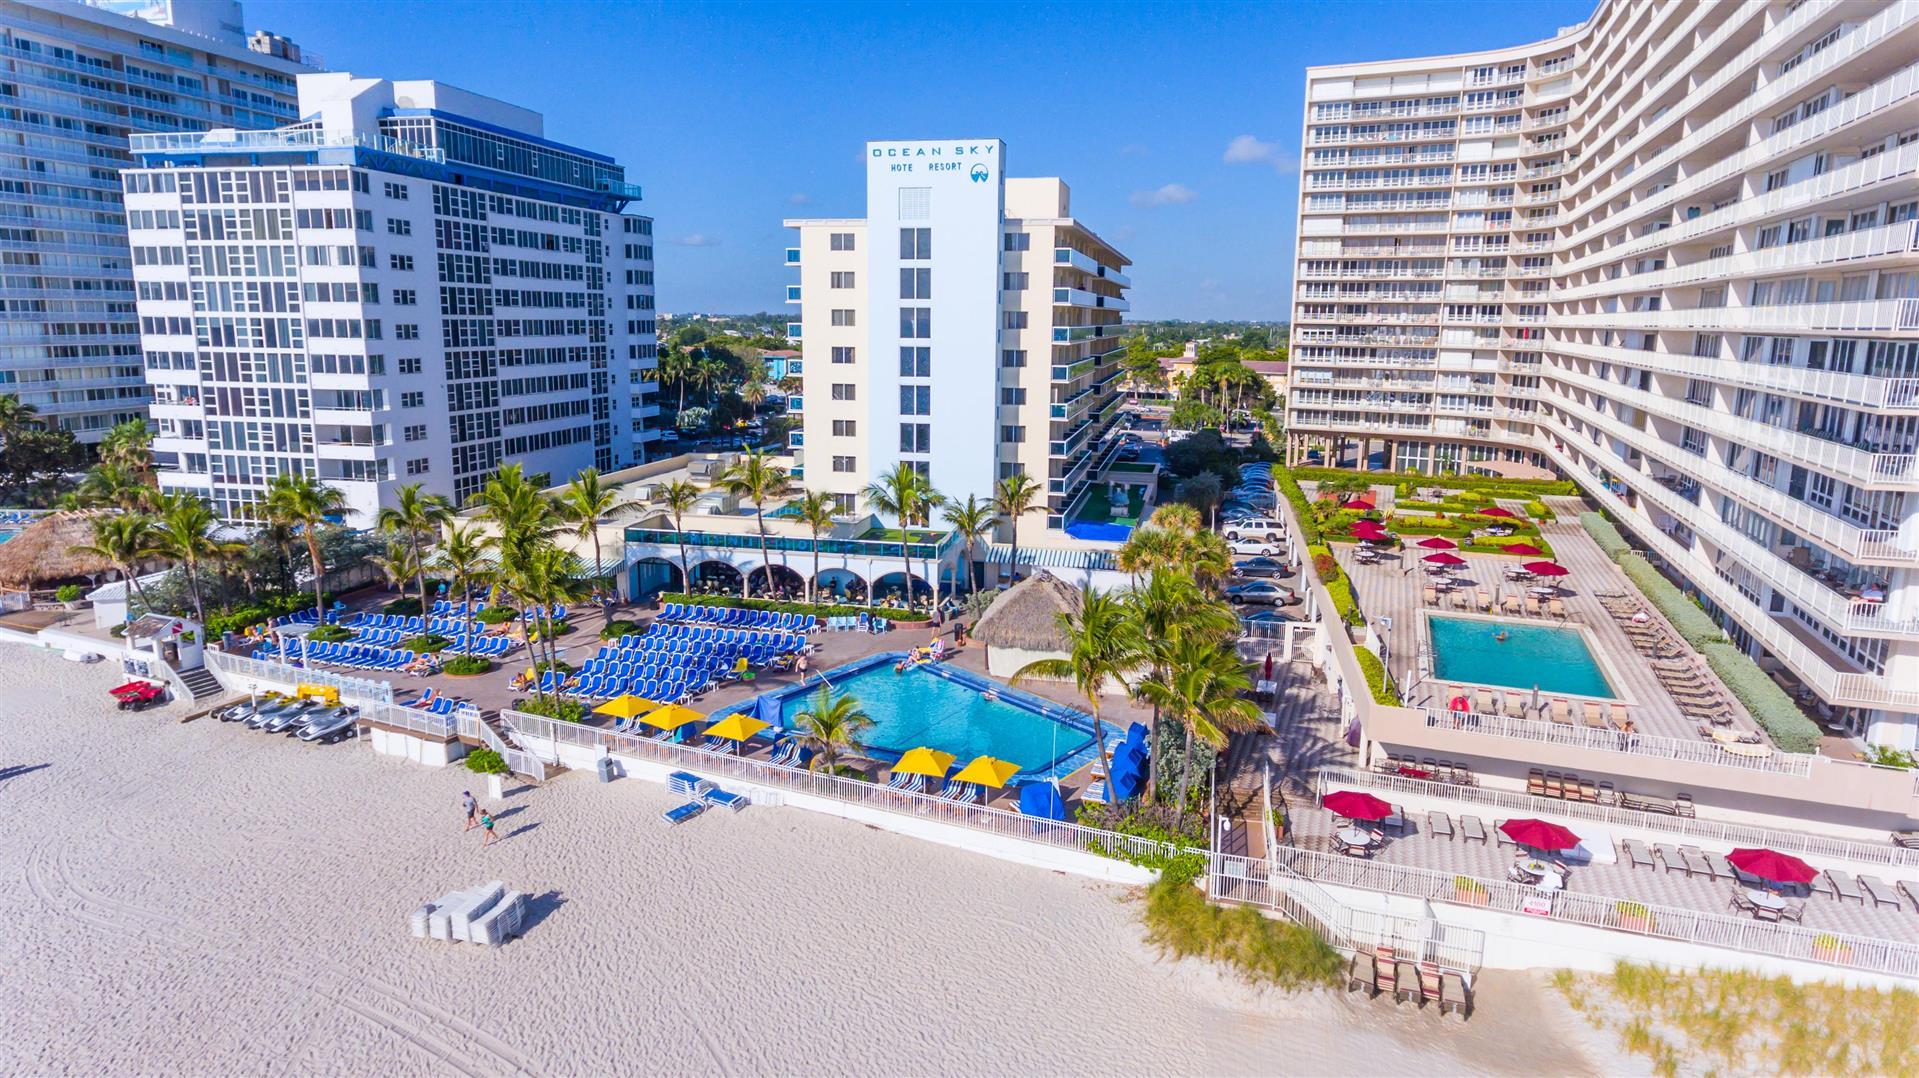 Ocean Sky Hotel & Resort in Fort Lauderdale, FL